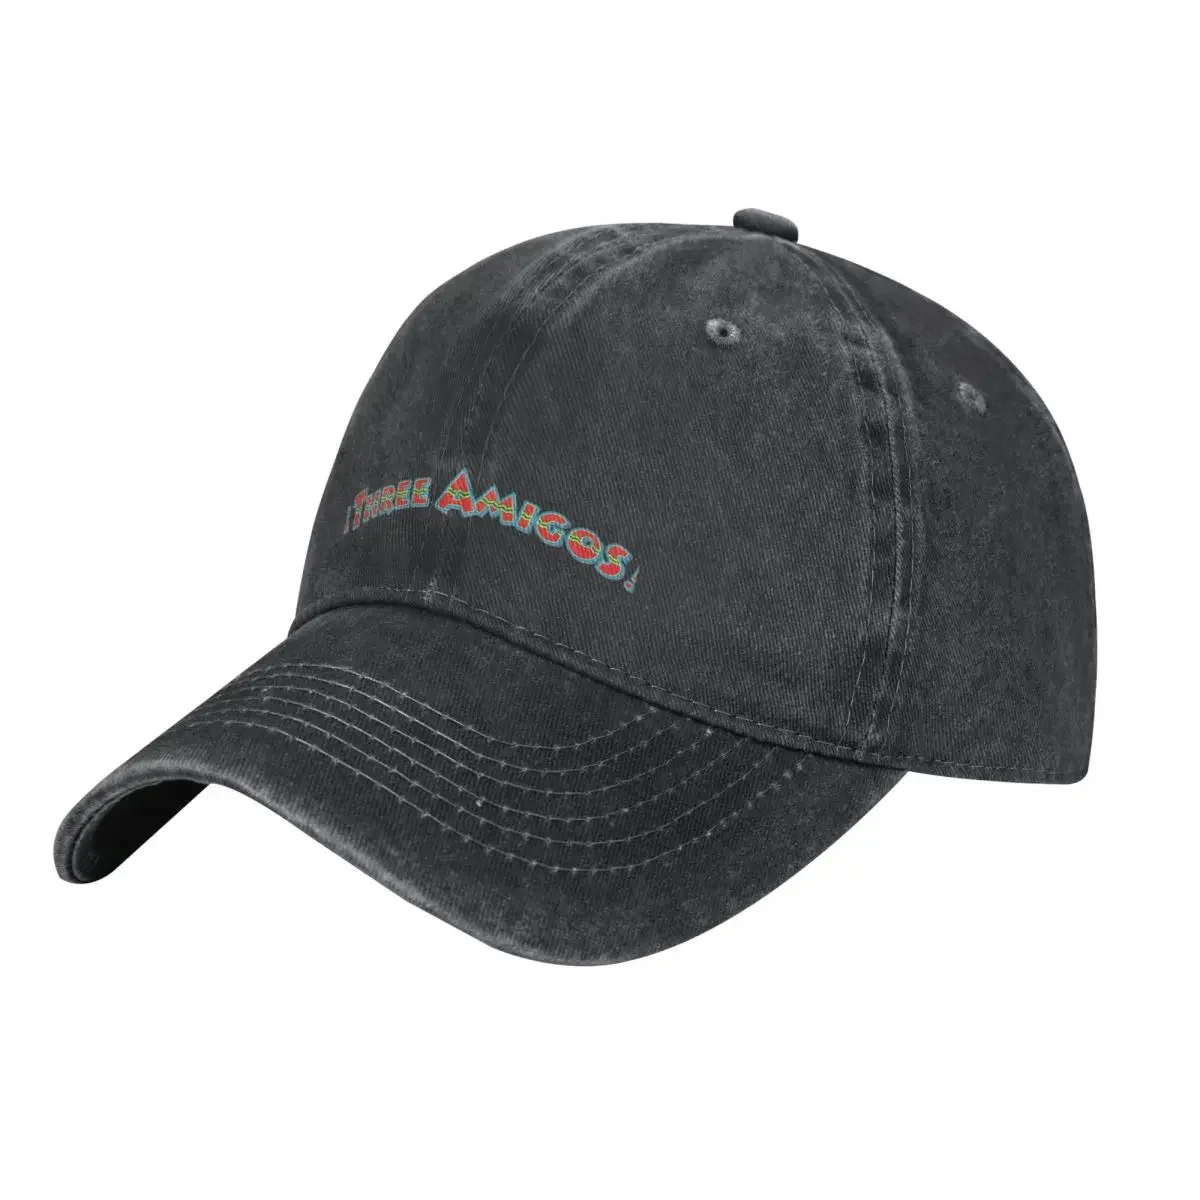 

Three Amigos Cowboy Hat sun hat Fishing cap Wild Ball Hat Visor Trucker Hats For Men Women's